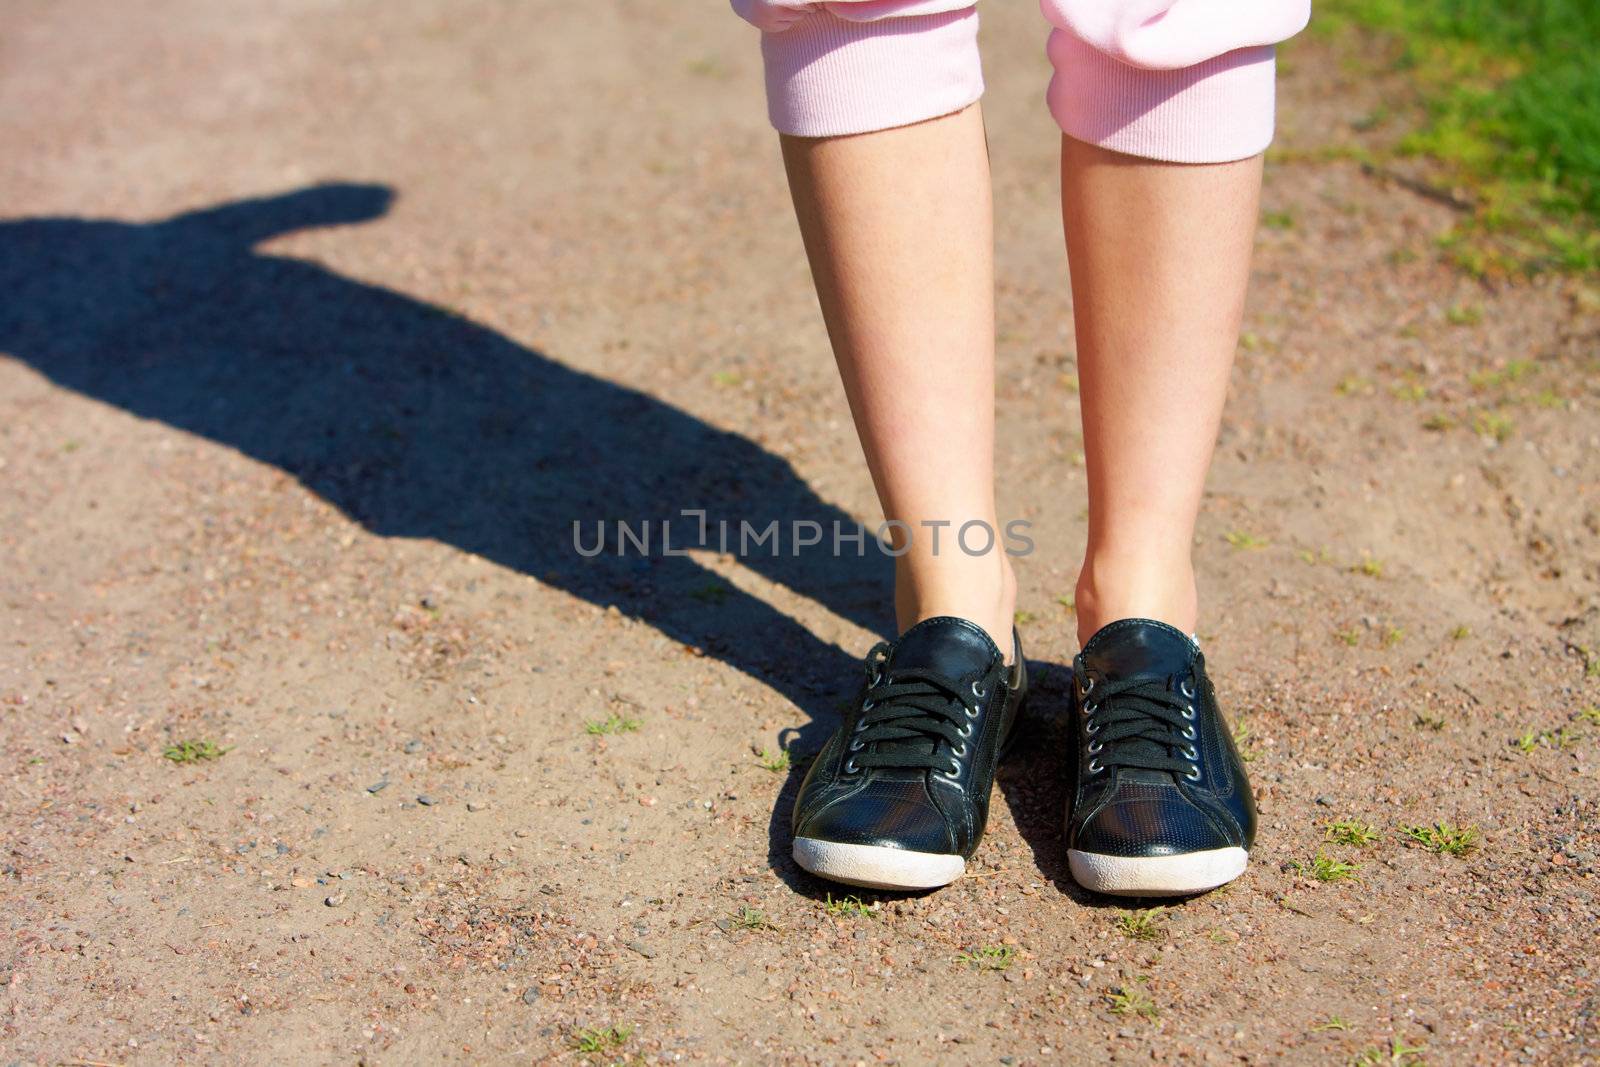 Shoes of teenage girl jogging